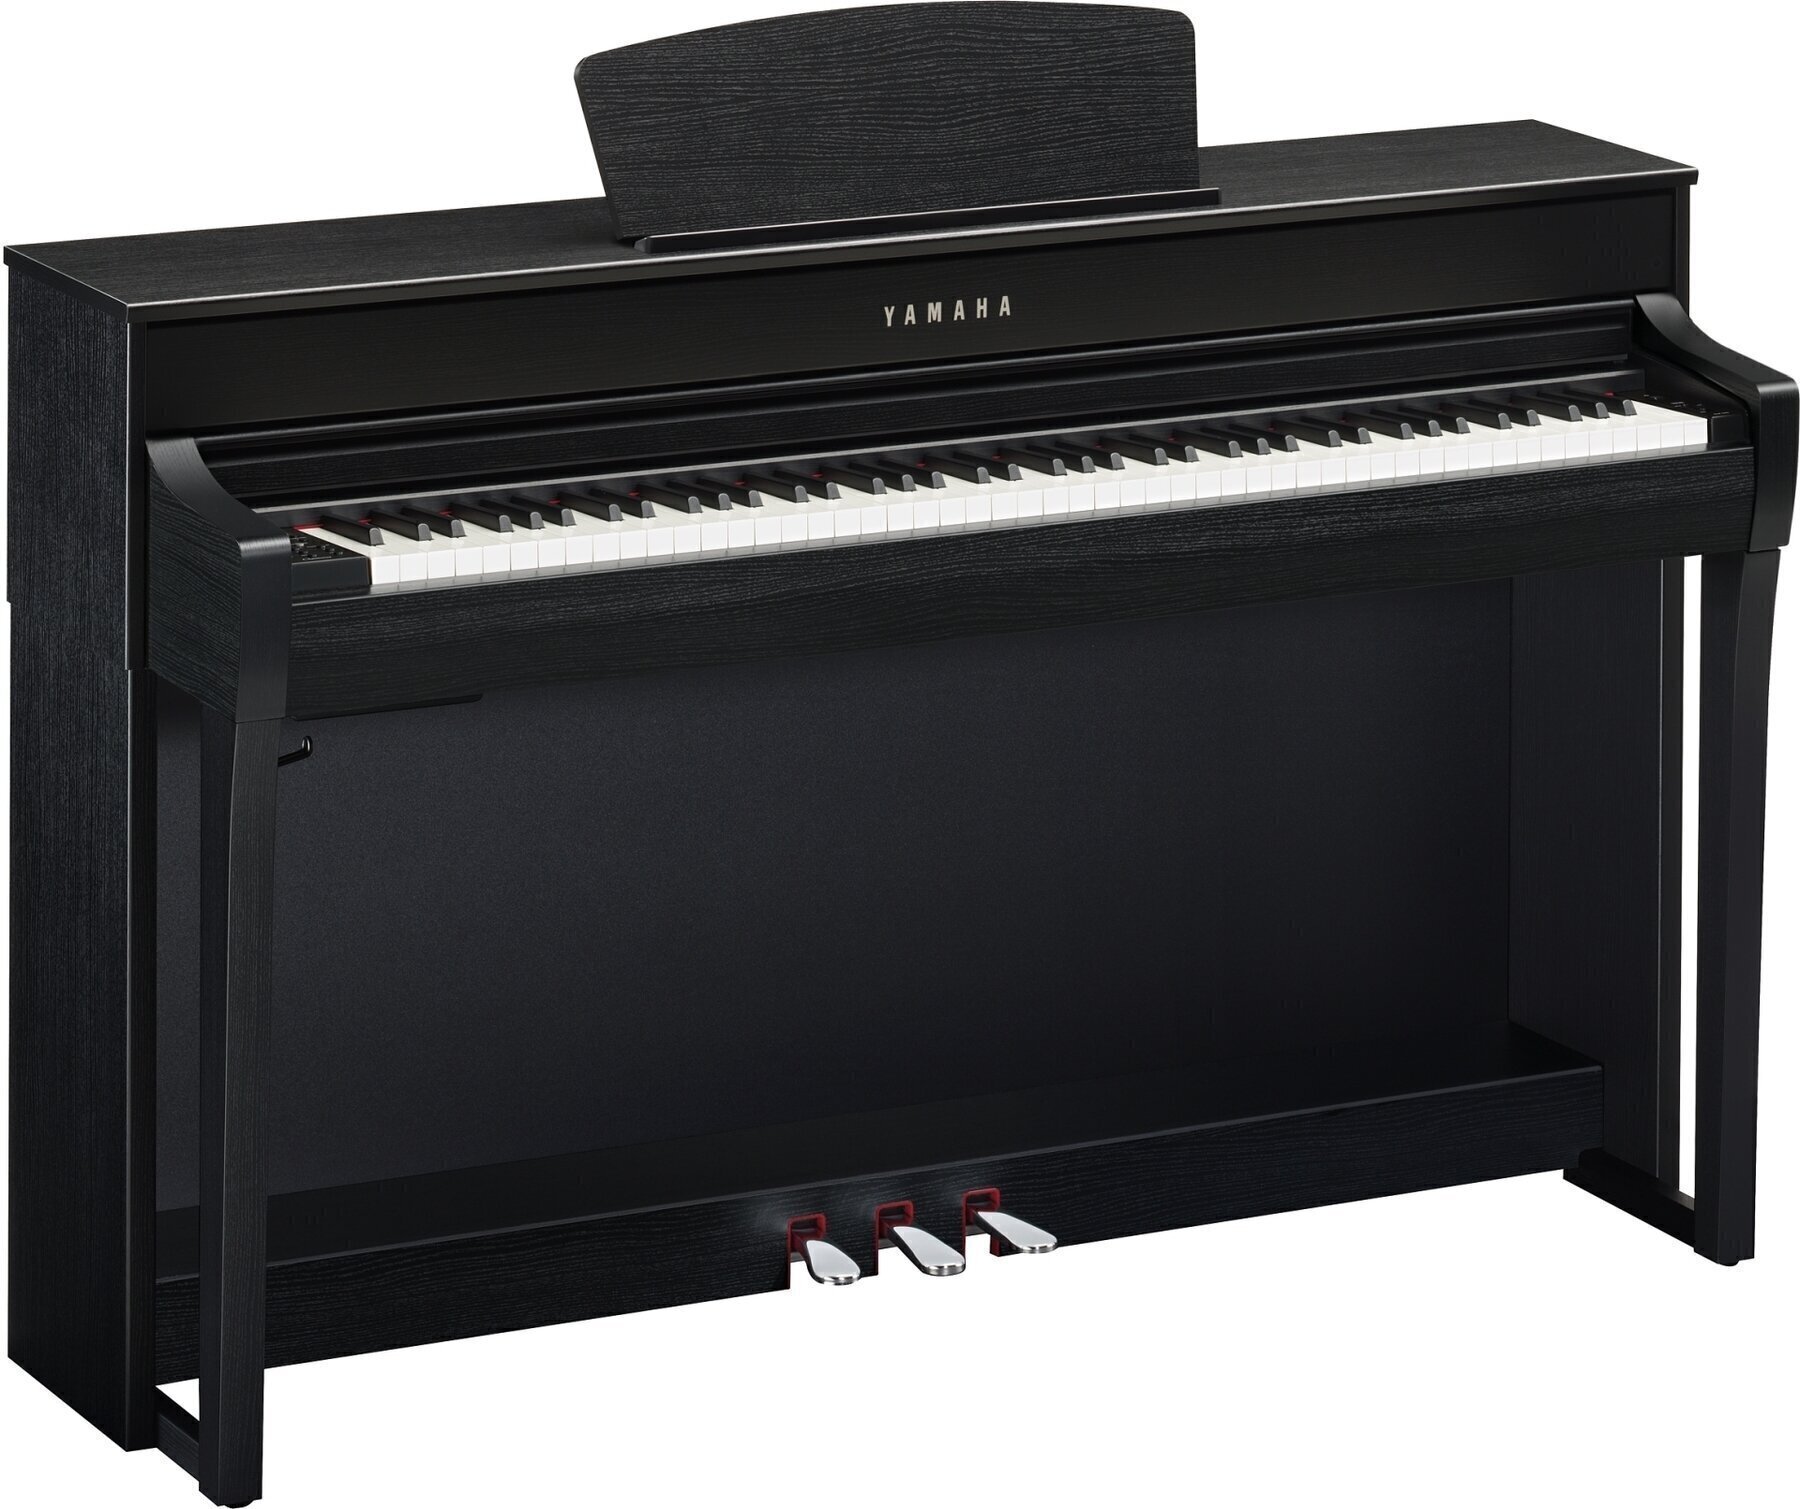 Piano Digitale Yamaha CLP 735 Nero Piano Digitale